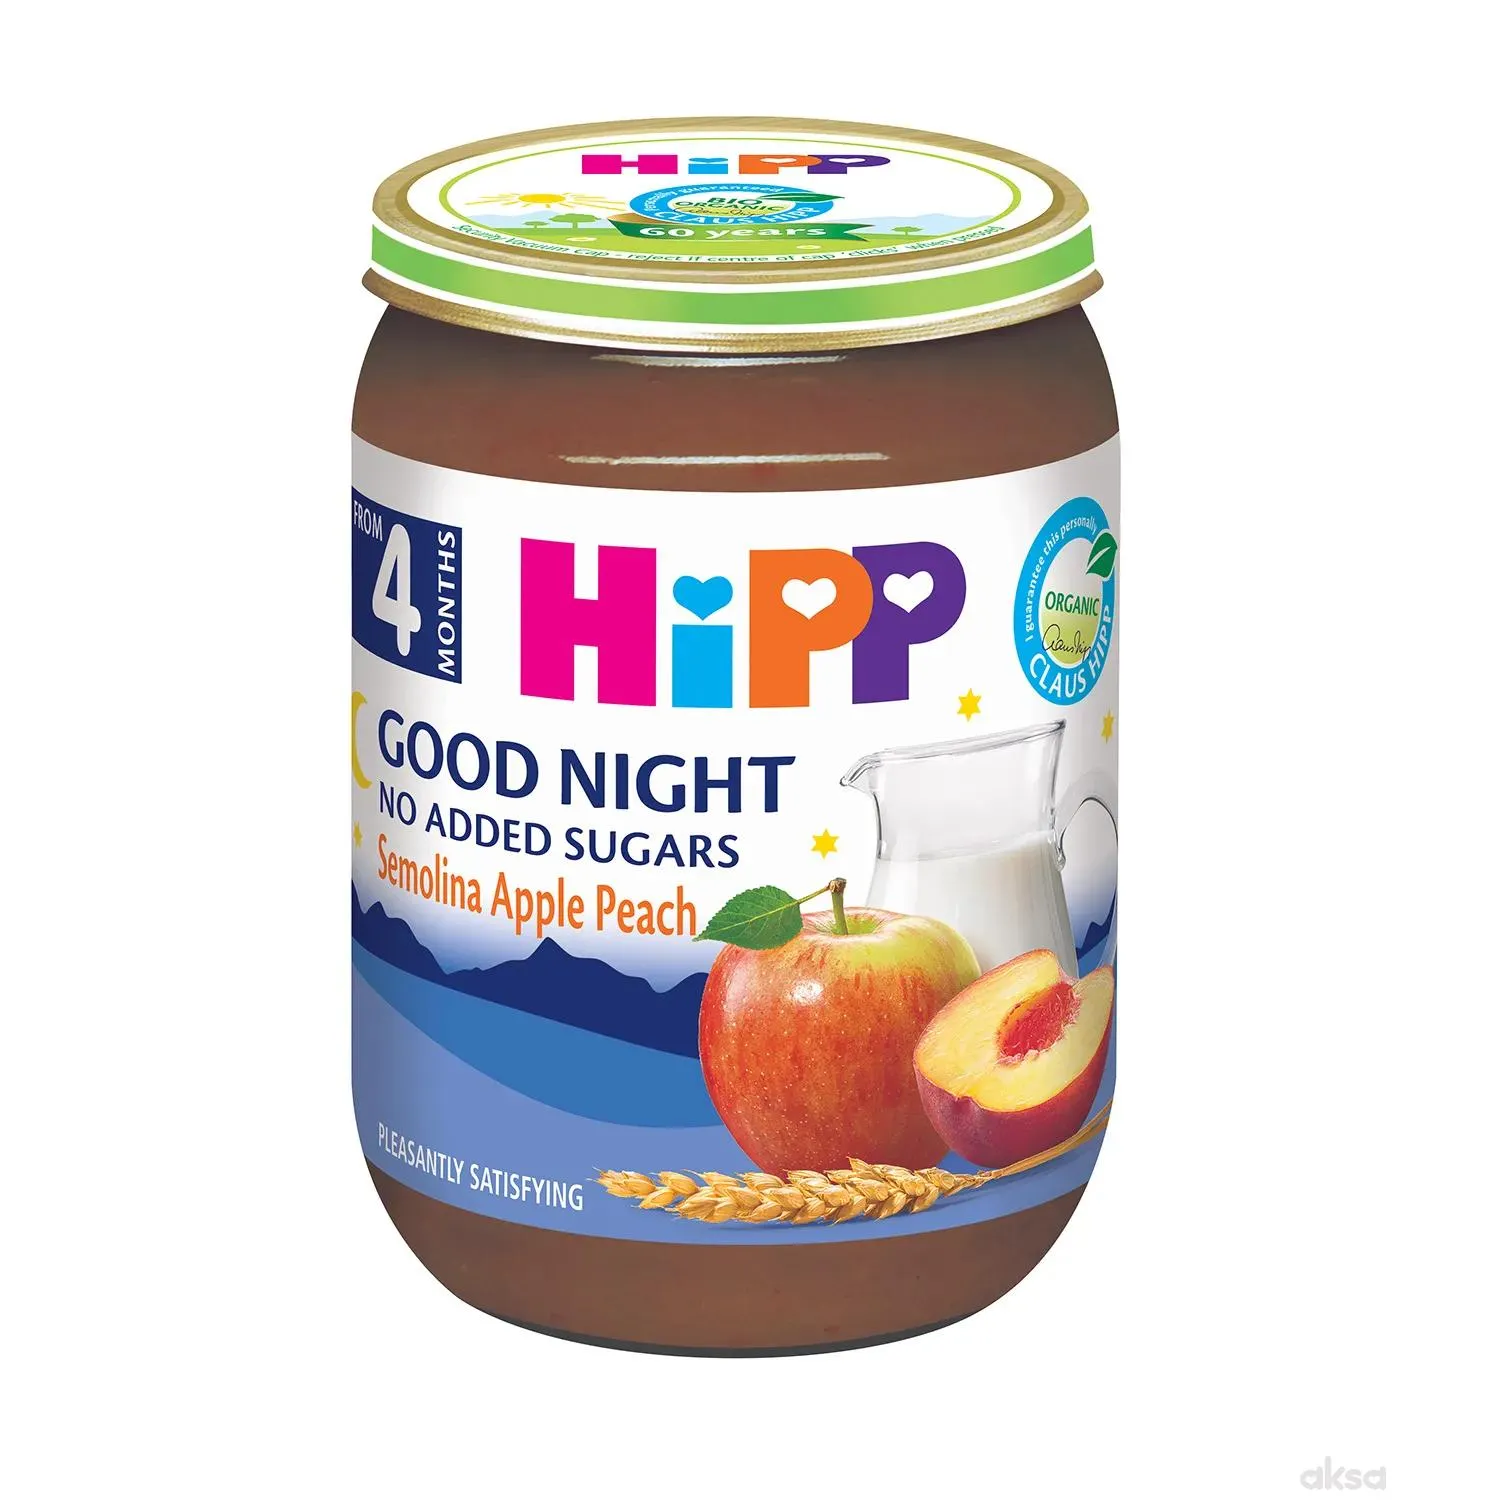 Hipp kašica za l. noć griz, jabuka, breskva 190g 